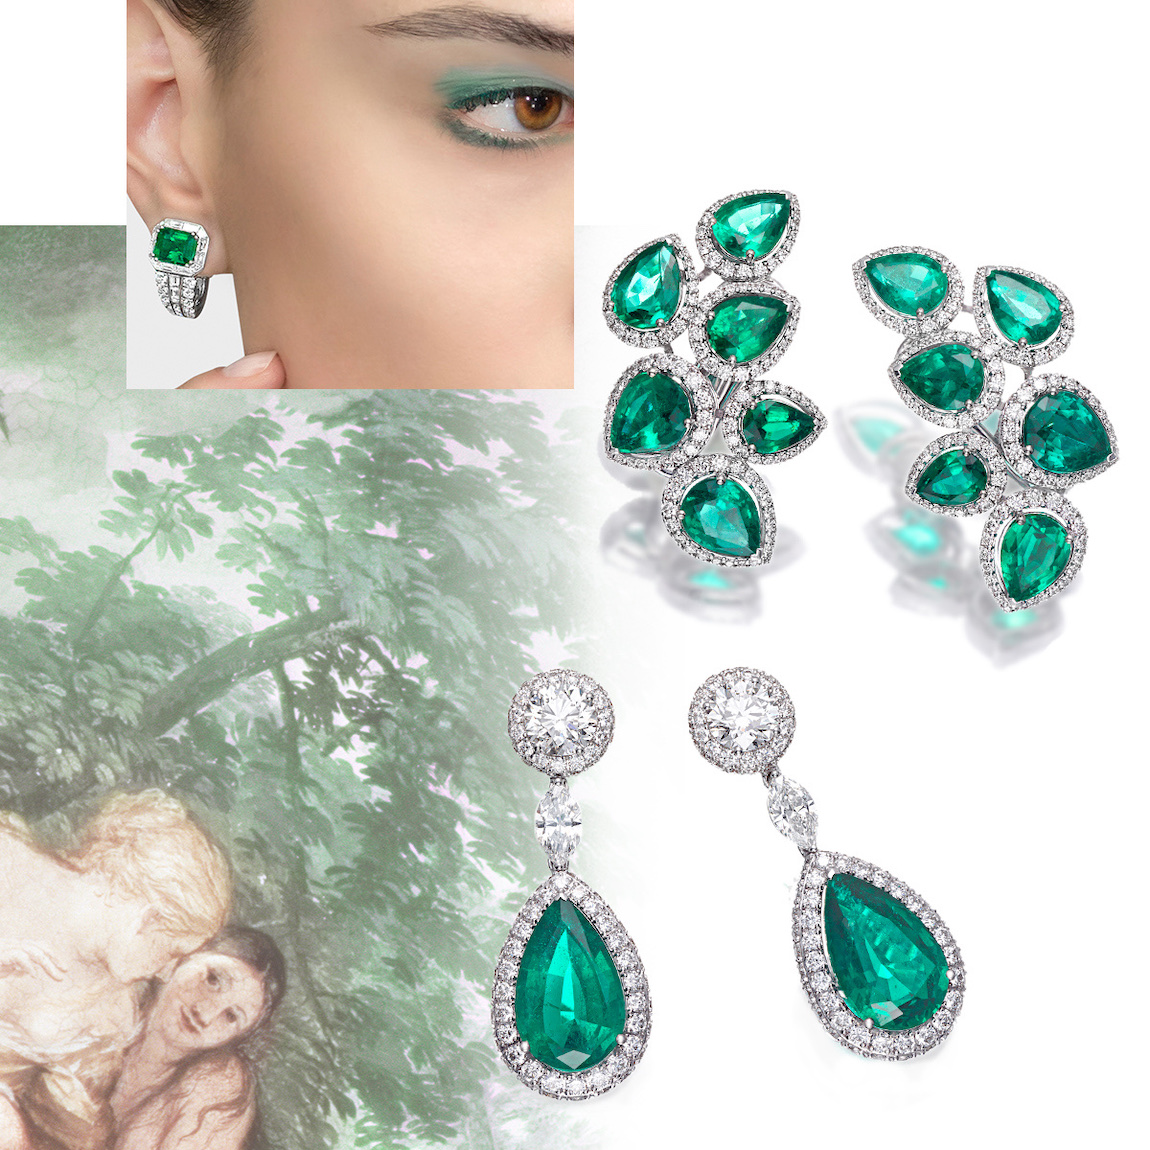 PICCHIOTTI Masterpieces Emerald earrings, Masterpieces Emerald Drop earrings, Fit for a Queen Emerald earrings